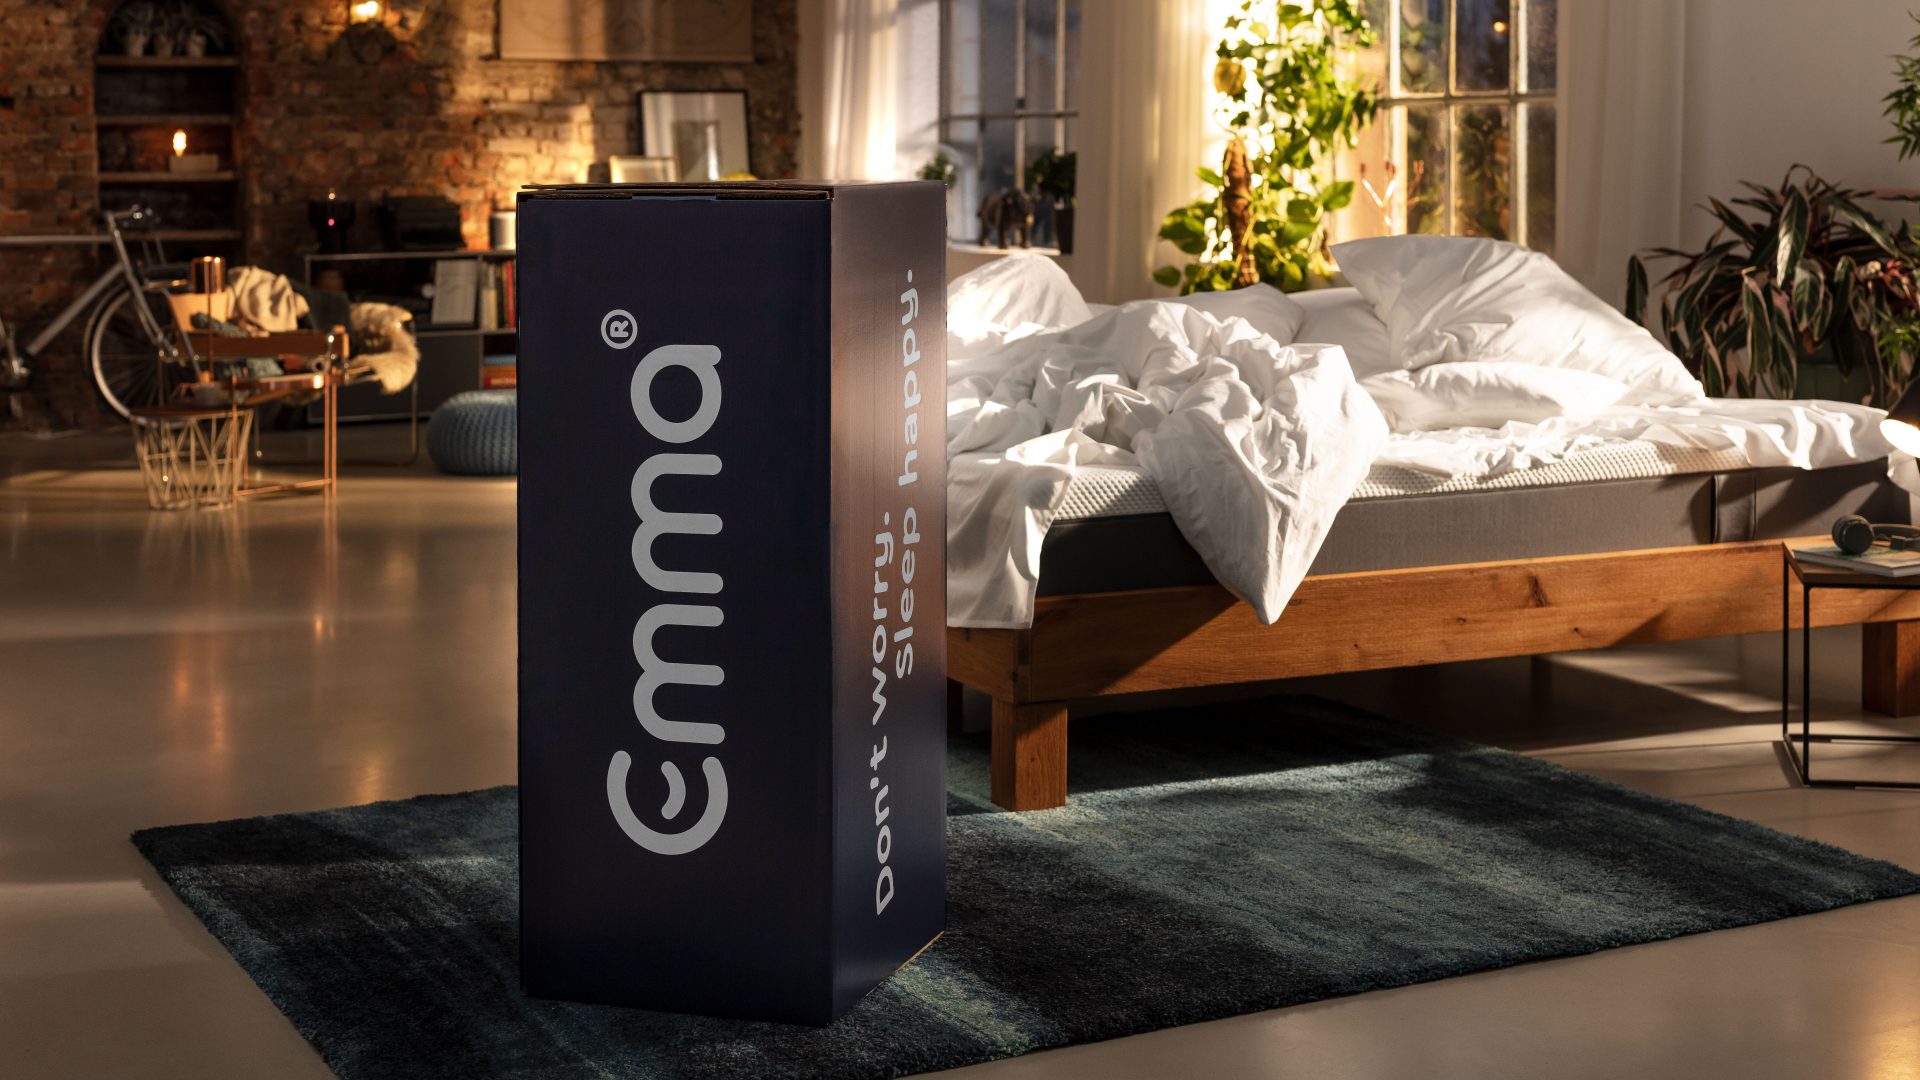 Emma_Europes_most_awarded_mattress_credits_Florian-Grill_copyright_Emma-Sleep-GmbH_1-1920x1080